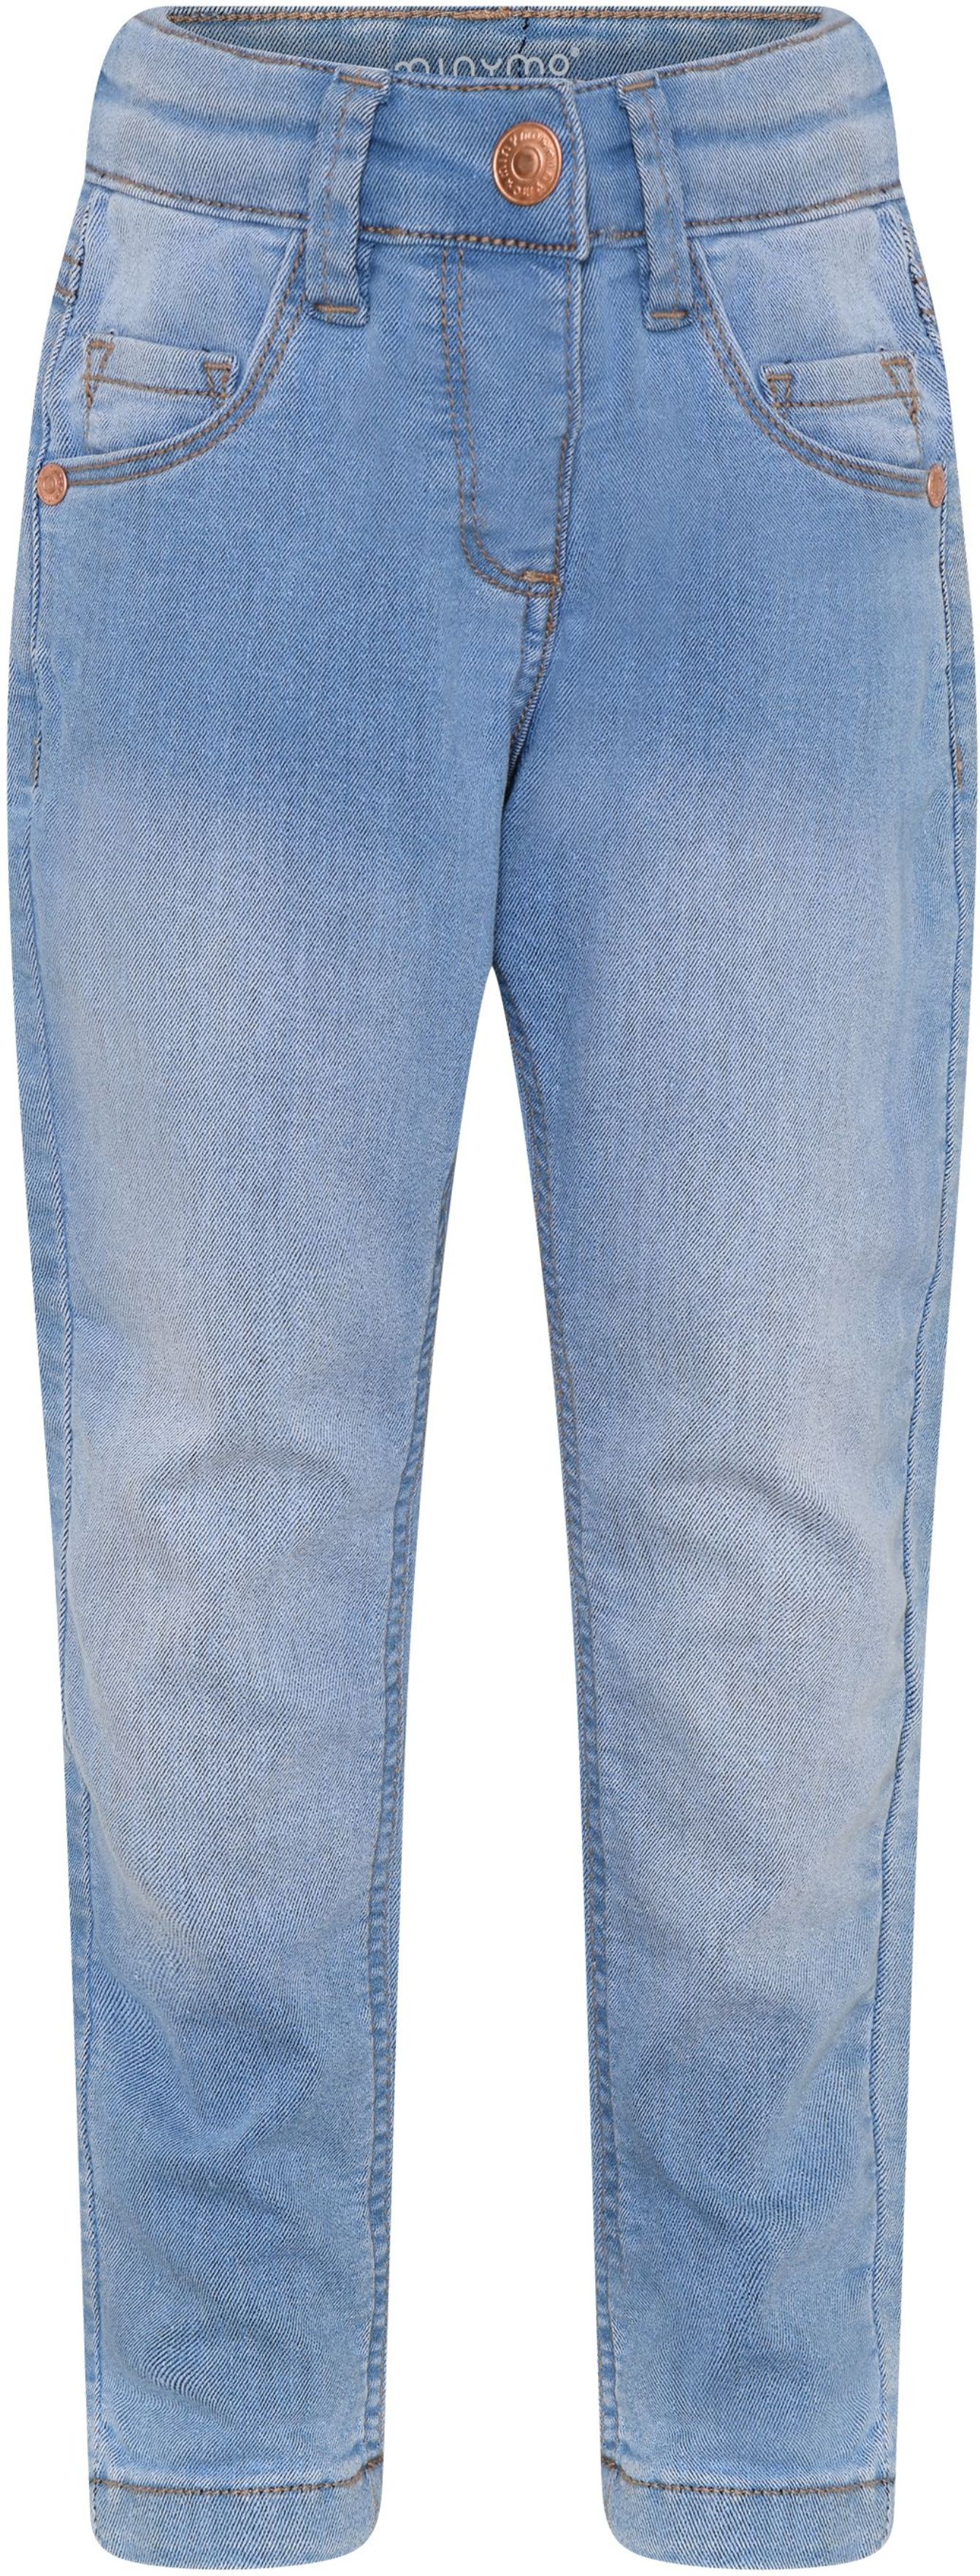 Minymo Girl Jeans Stretch Slim Fit light dusty blue